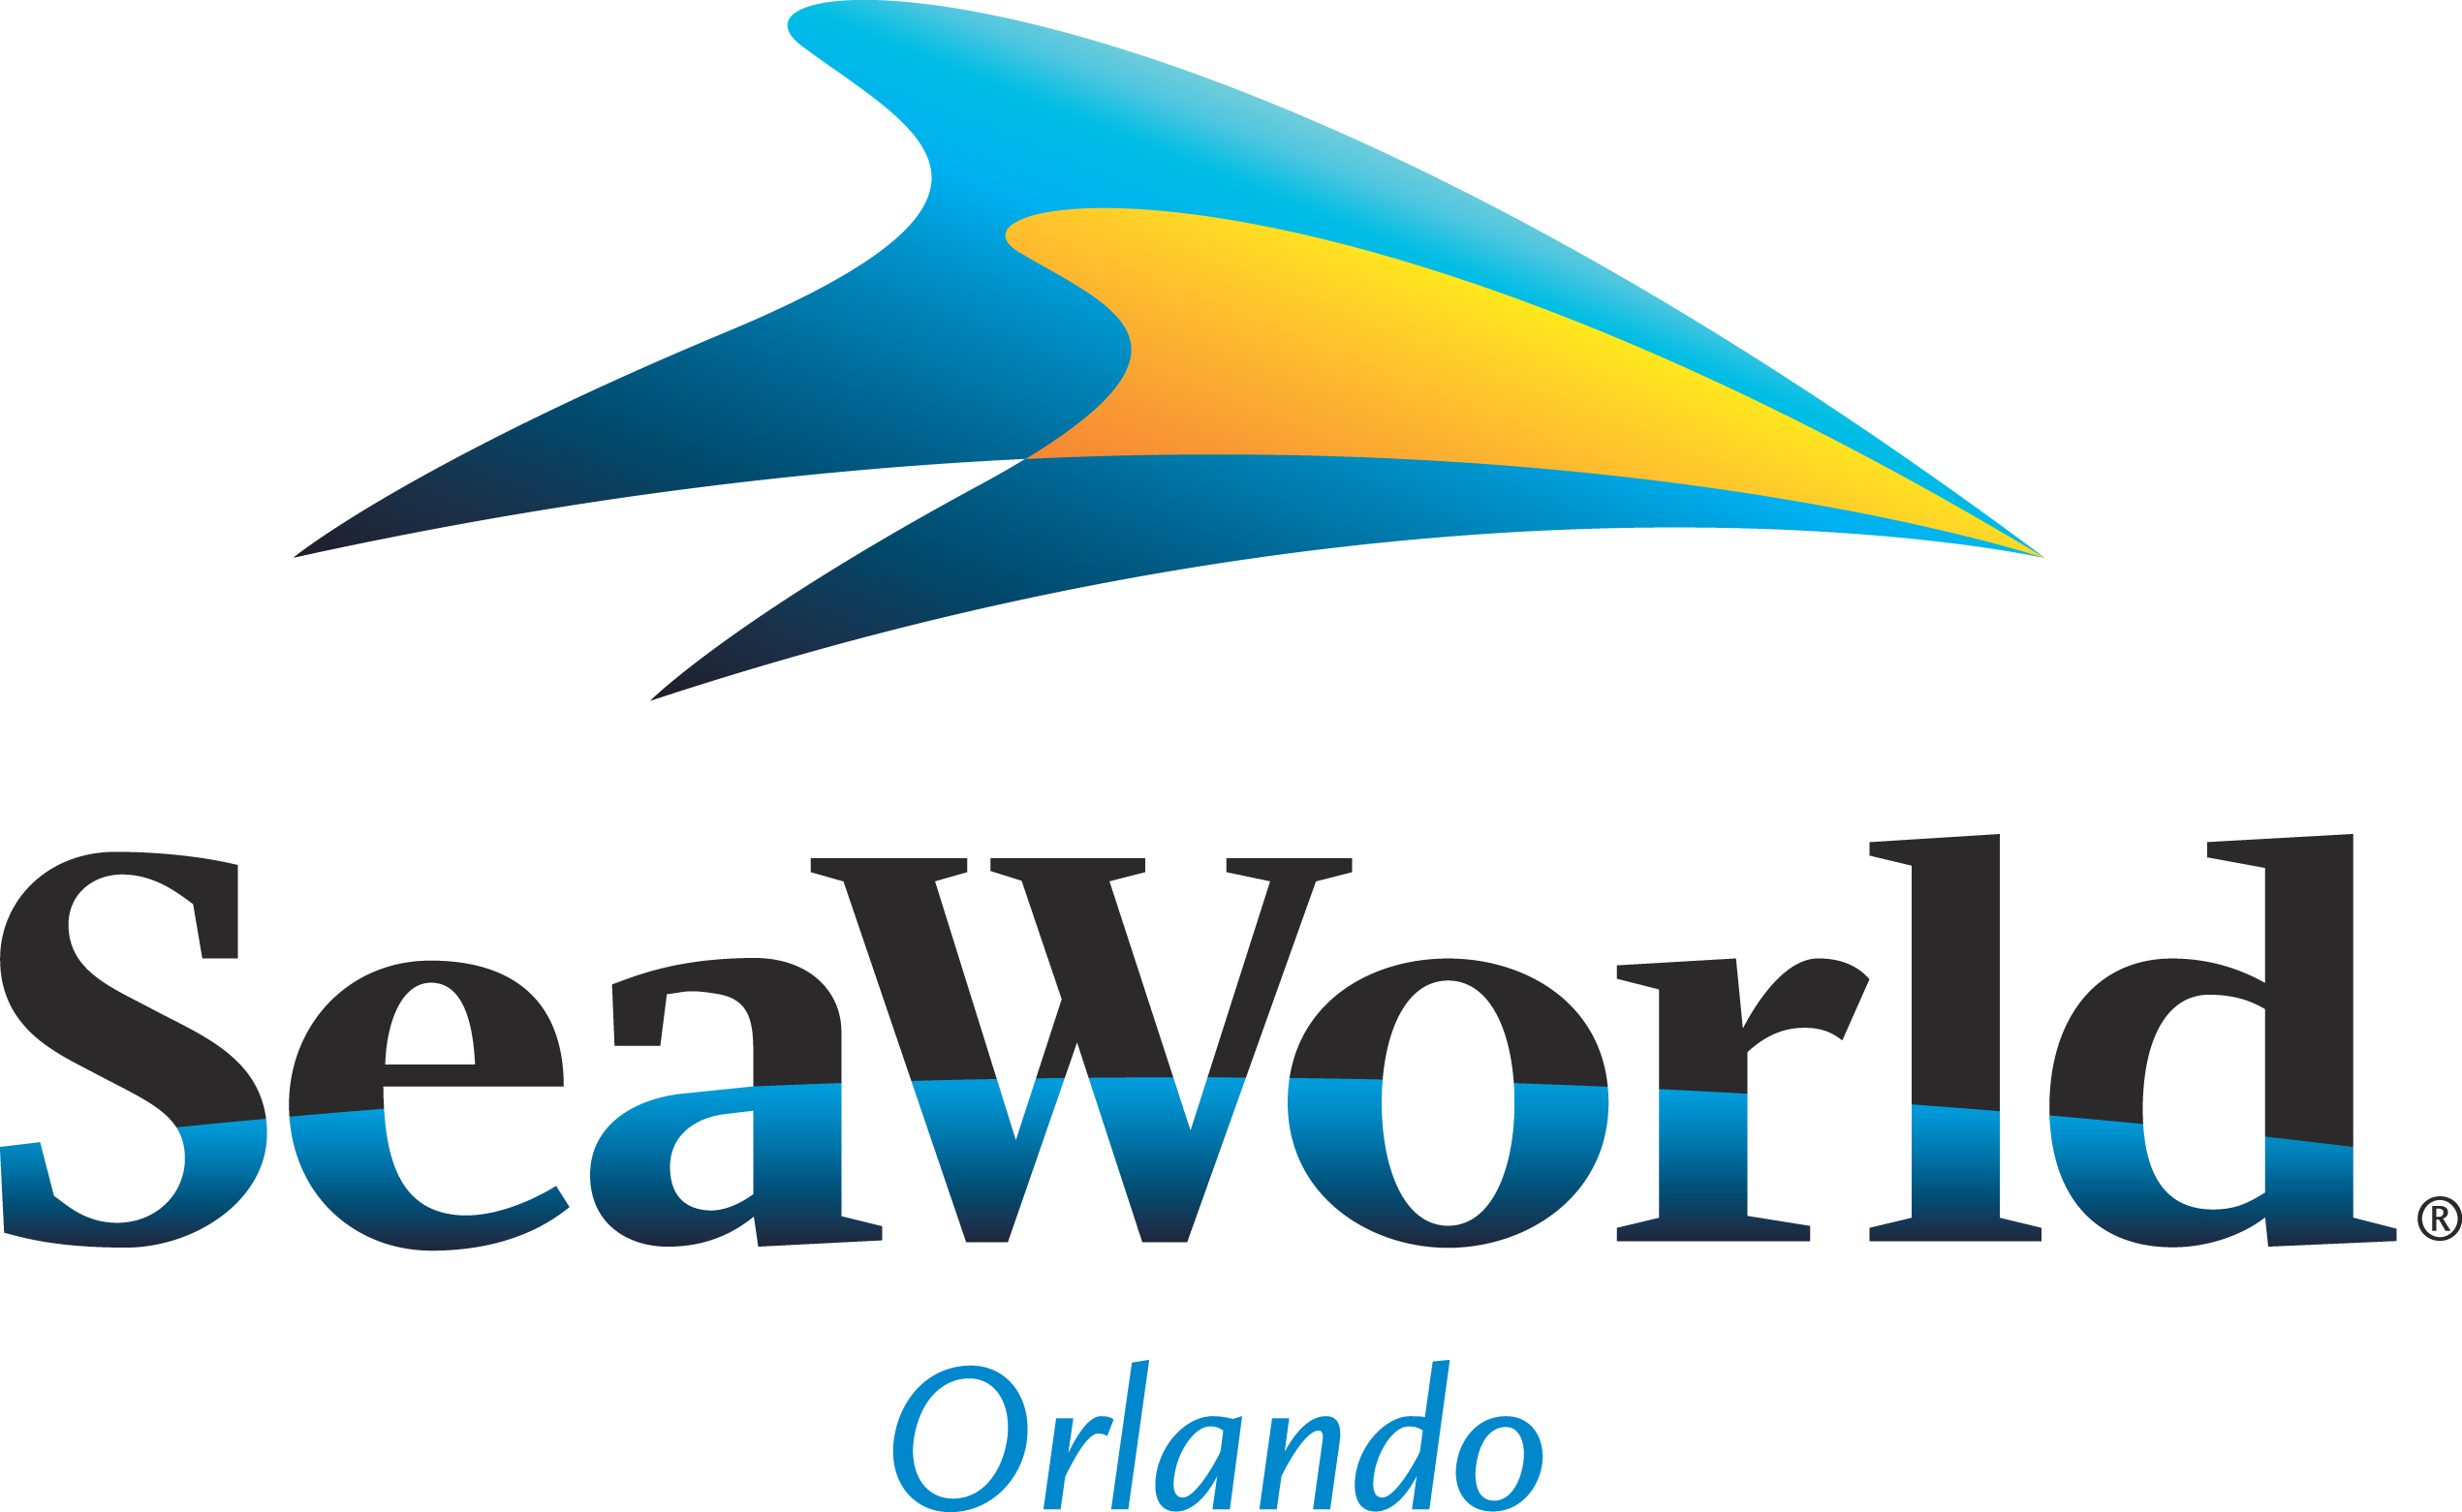 Sea World Orlando logo and seaworld group discount tickets